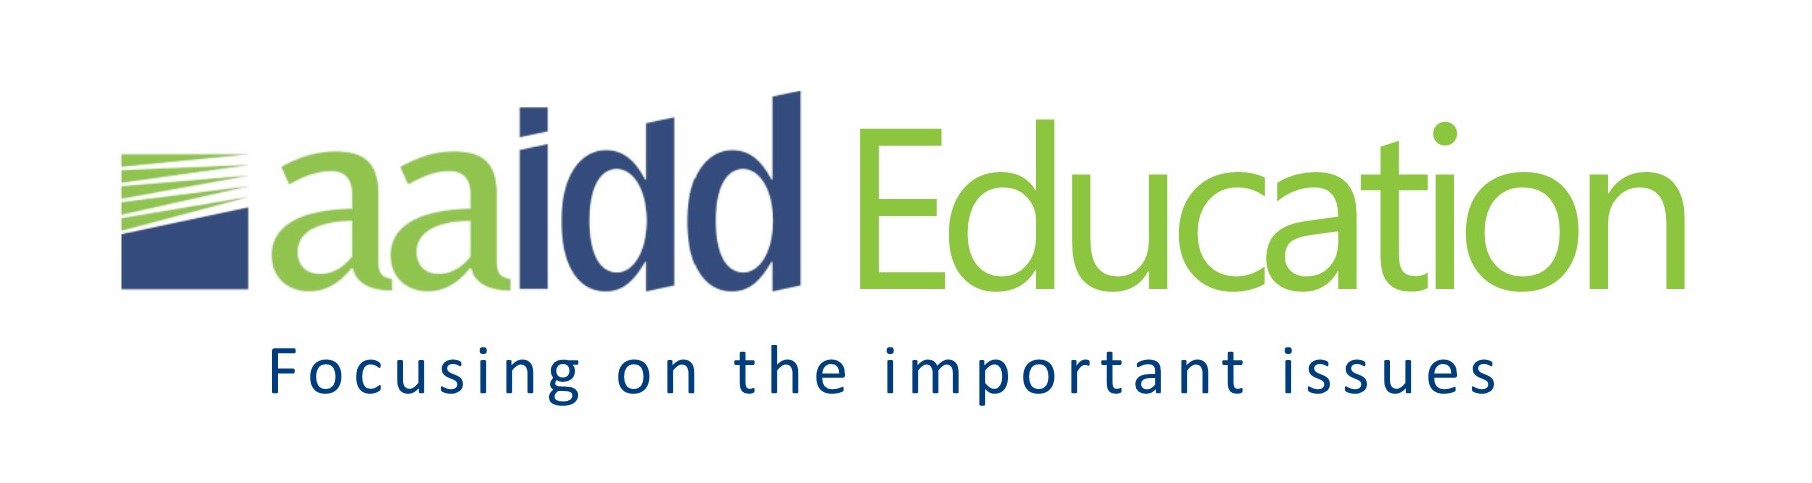 aaidd education